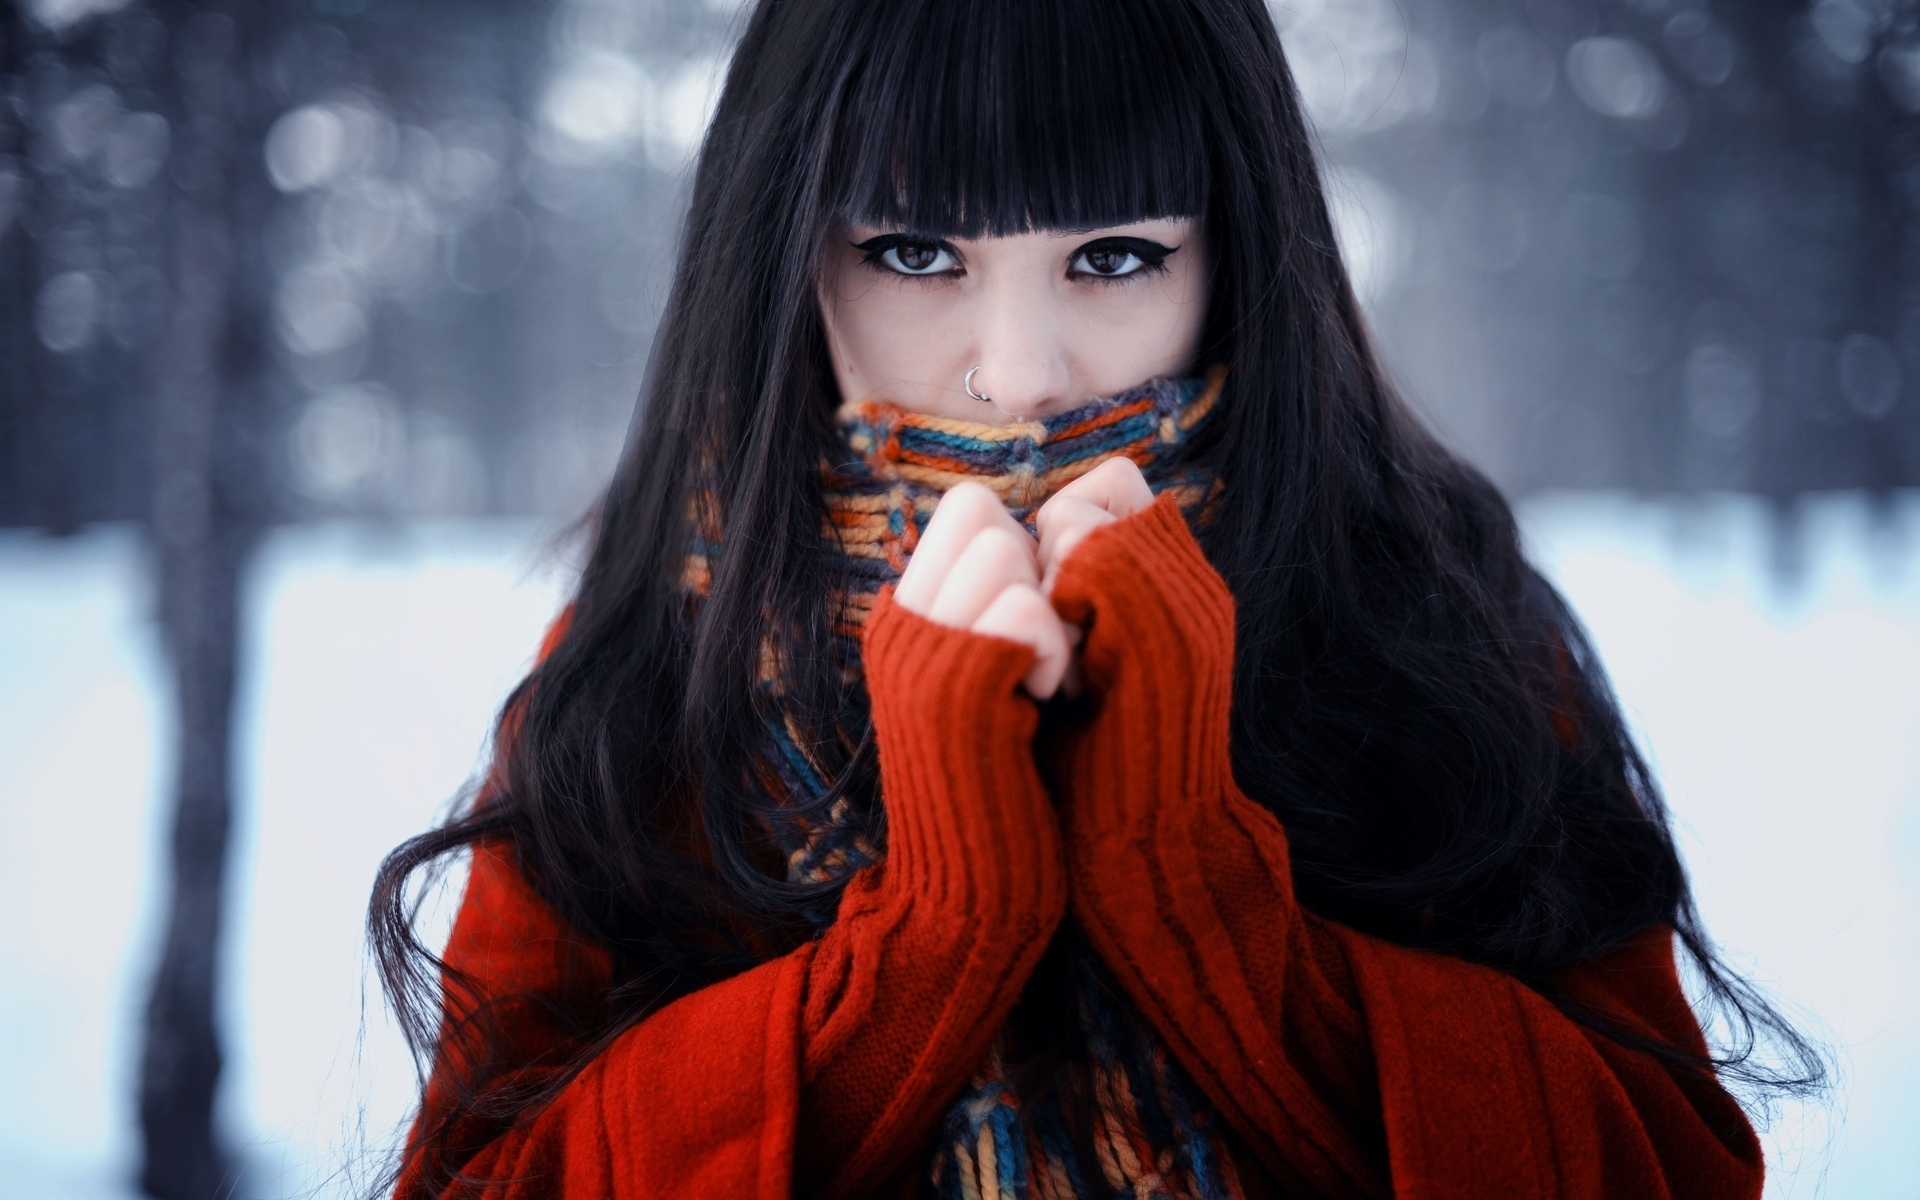 Image: Brunette, view, warm, hot, jacket, scarf, hair, piercings, winter